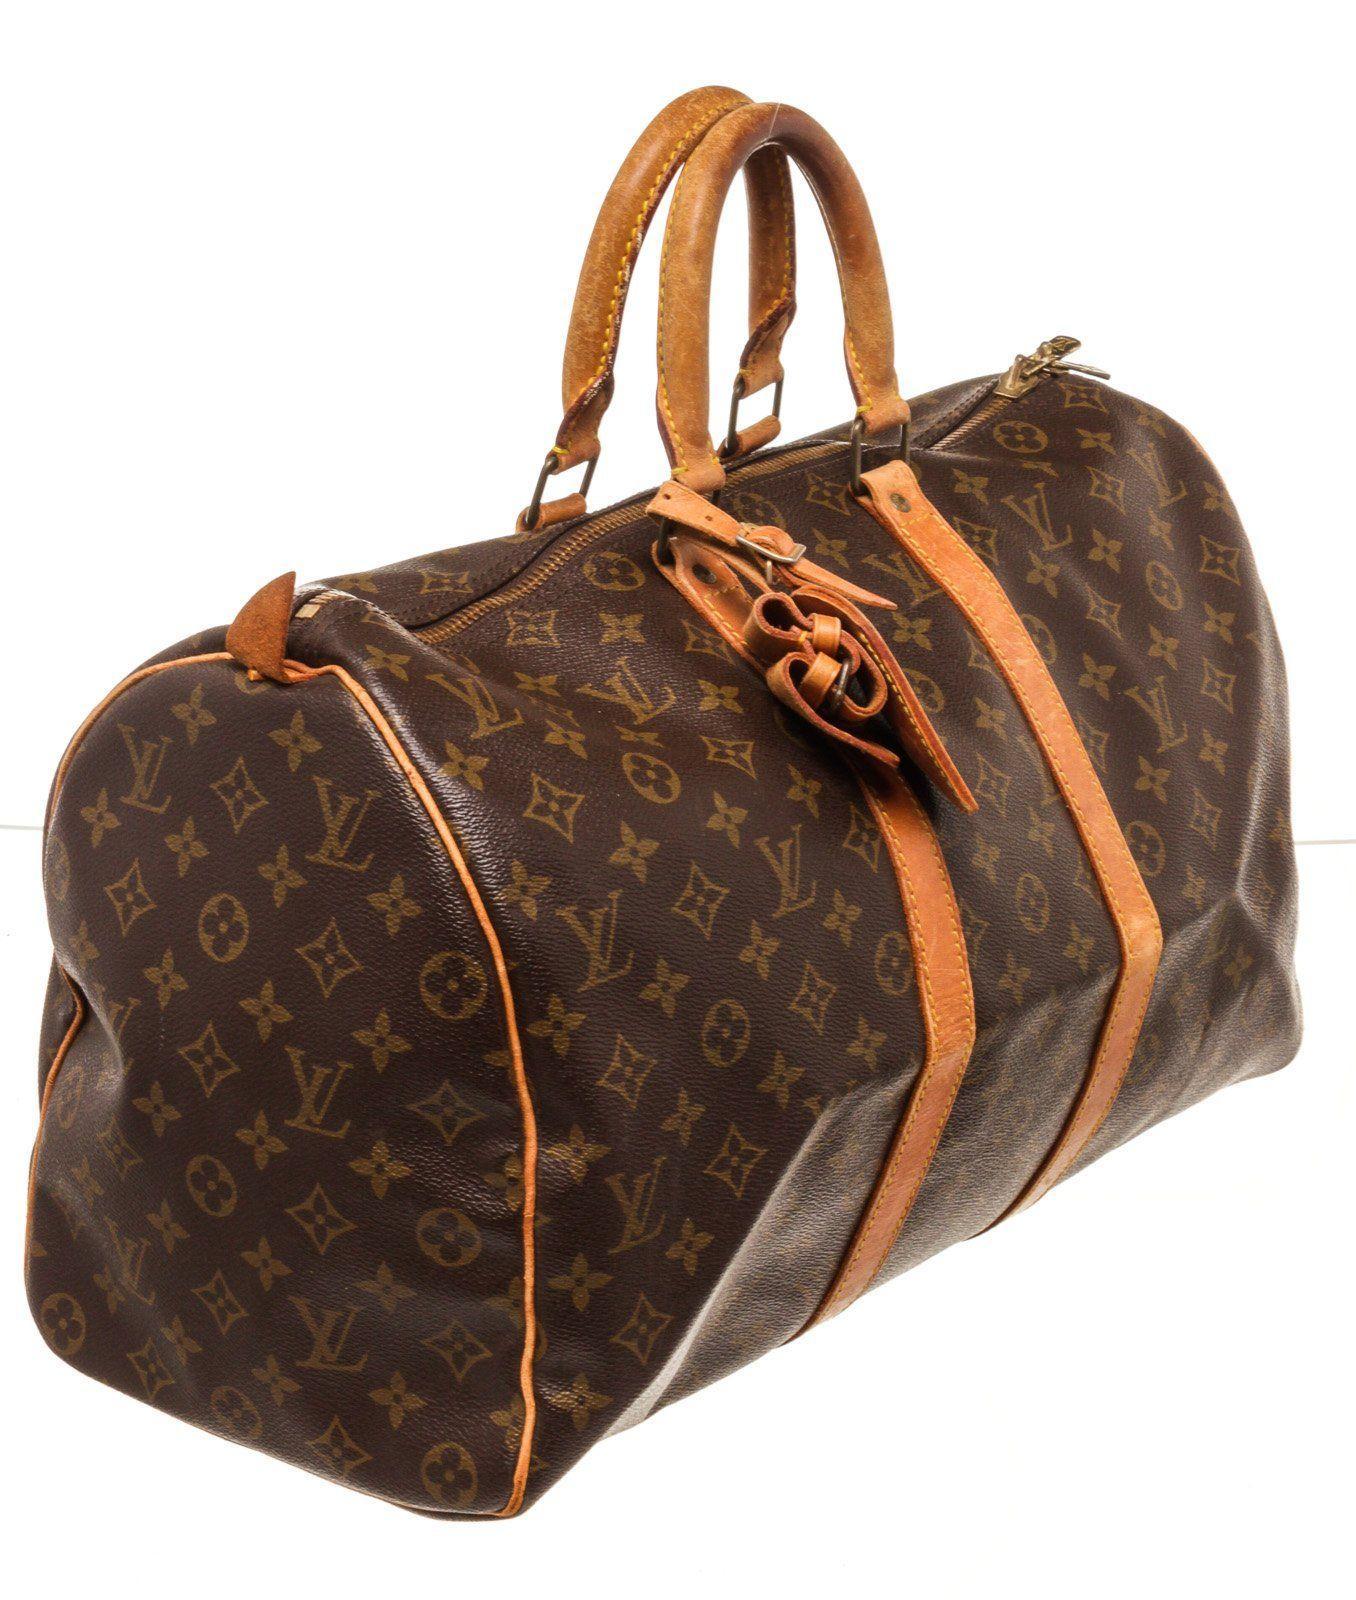 Louis Vuitton Brown Monogram Keepall 45cm Travel Bag with material monogram canvas, gold-tone hardware, interior zip pockets, dual top handles handle, and zip closure.

38822MSC